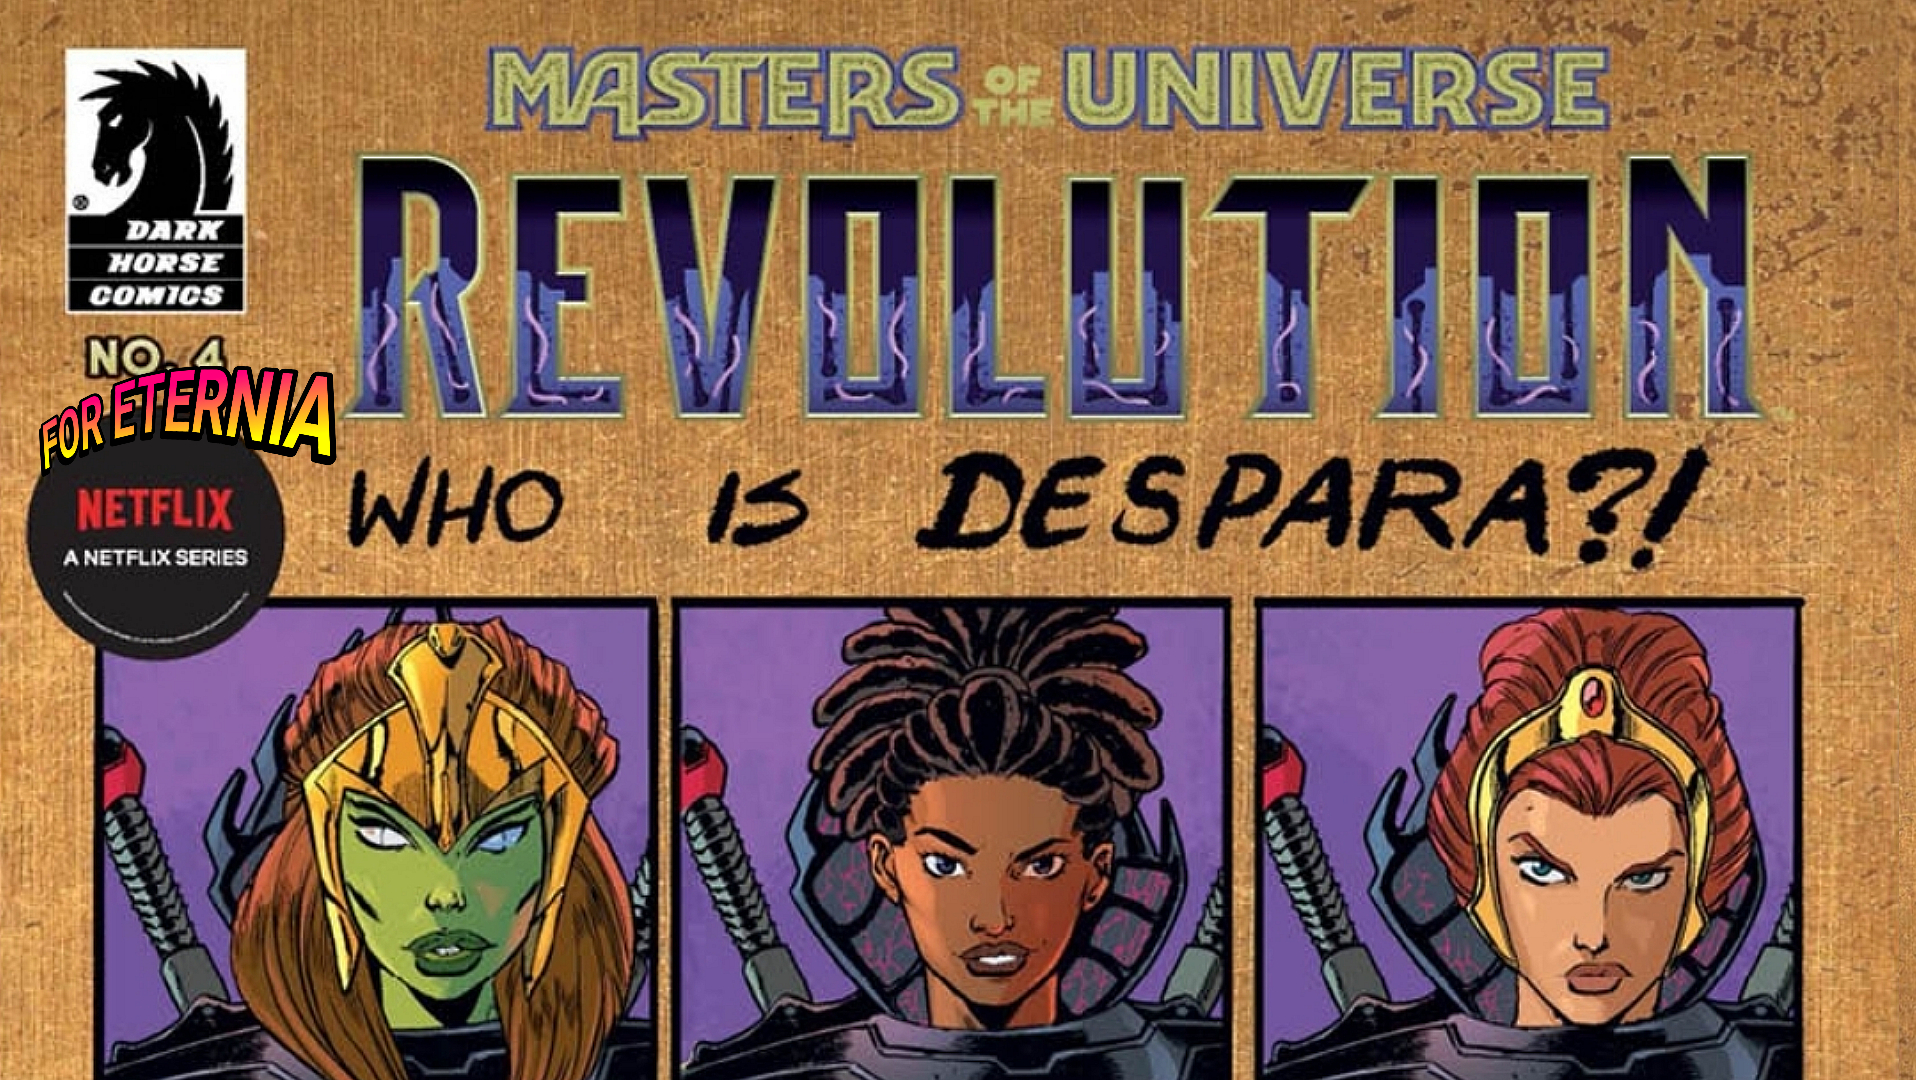 Mattel announces new ”Masters of the Universe: Revolution” Prequel comic series